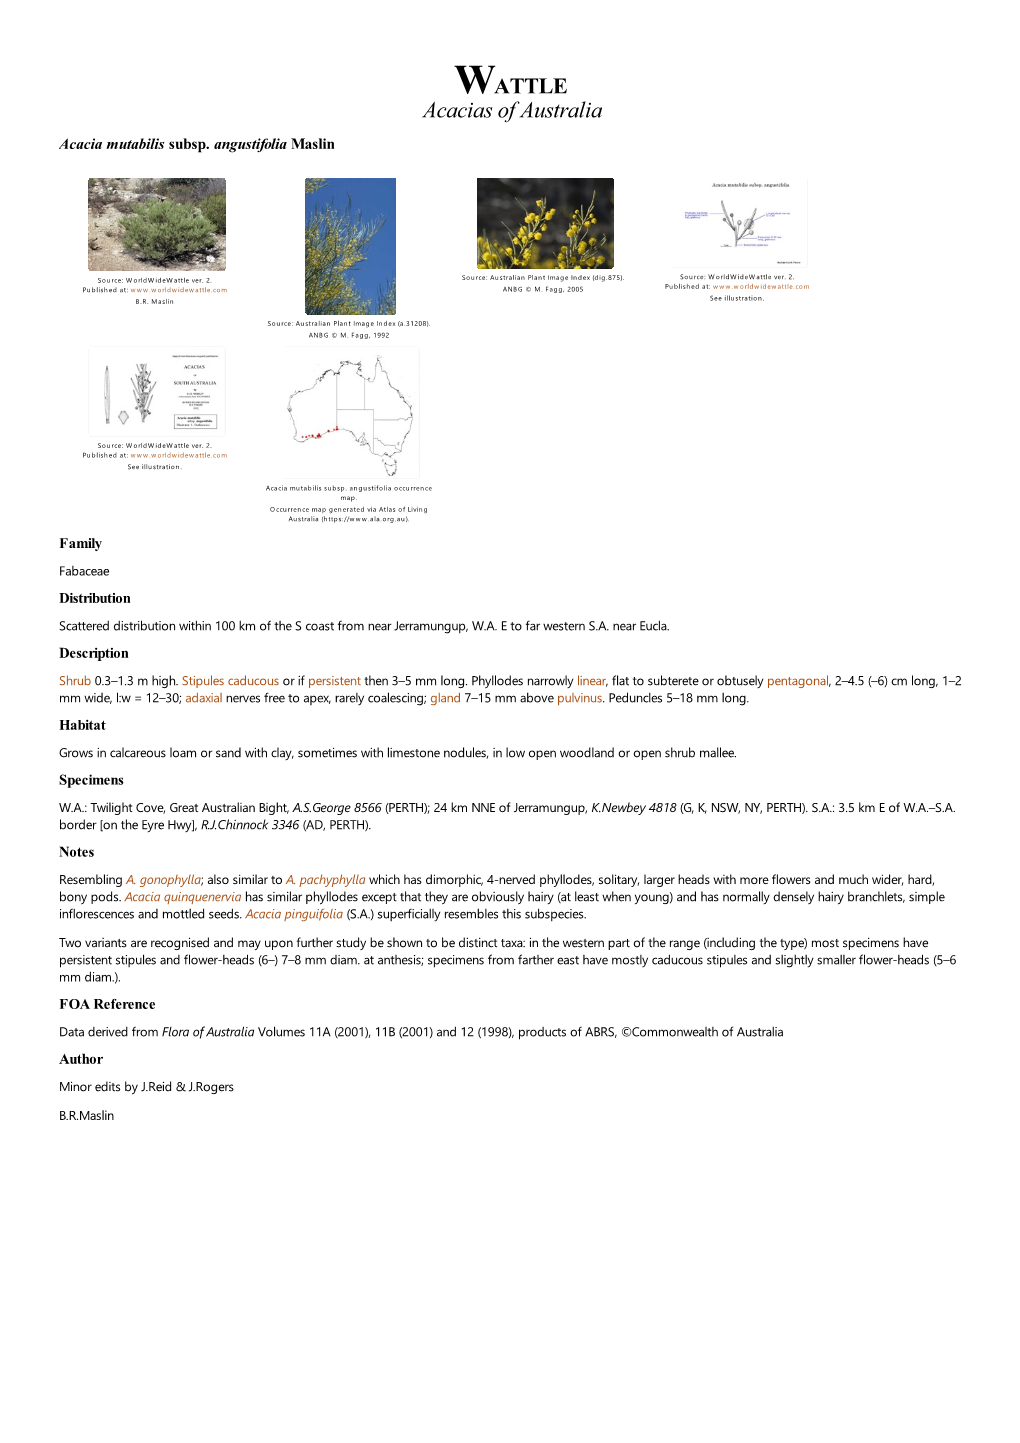 Acacia Mutabilis Subsp. Angustifolia Maslin